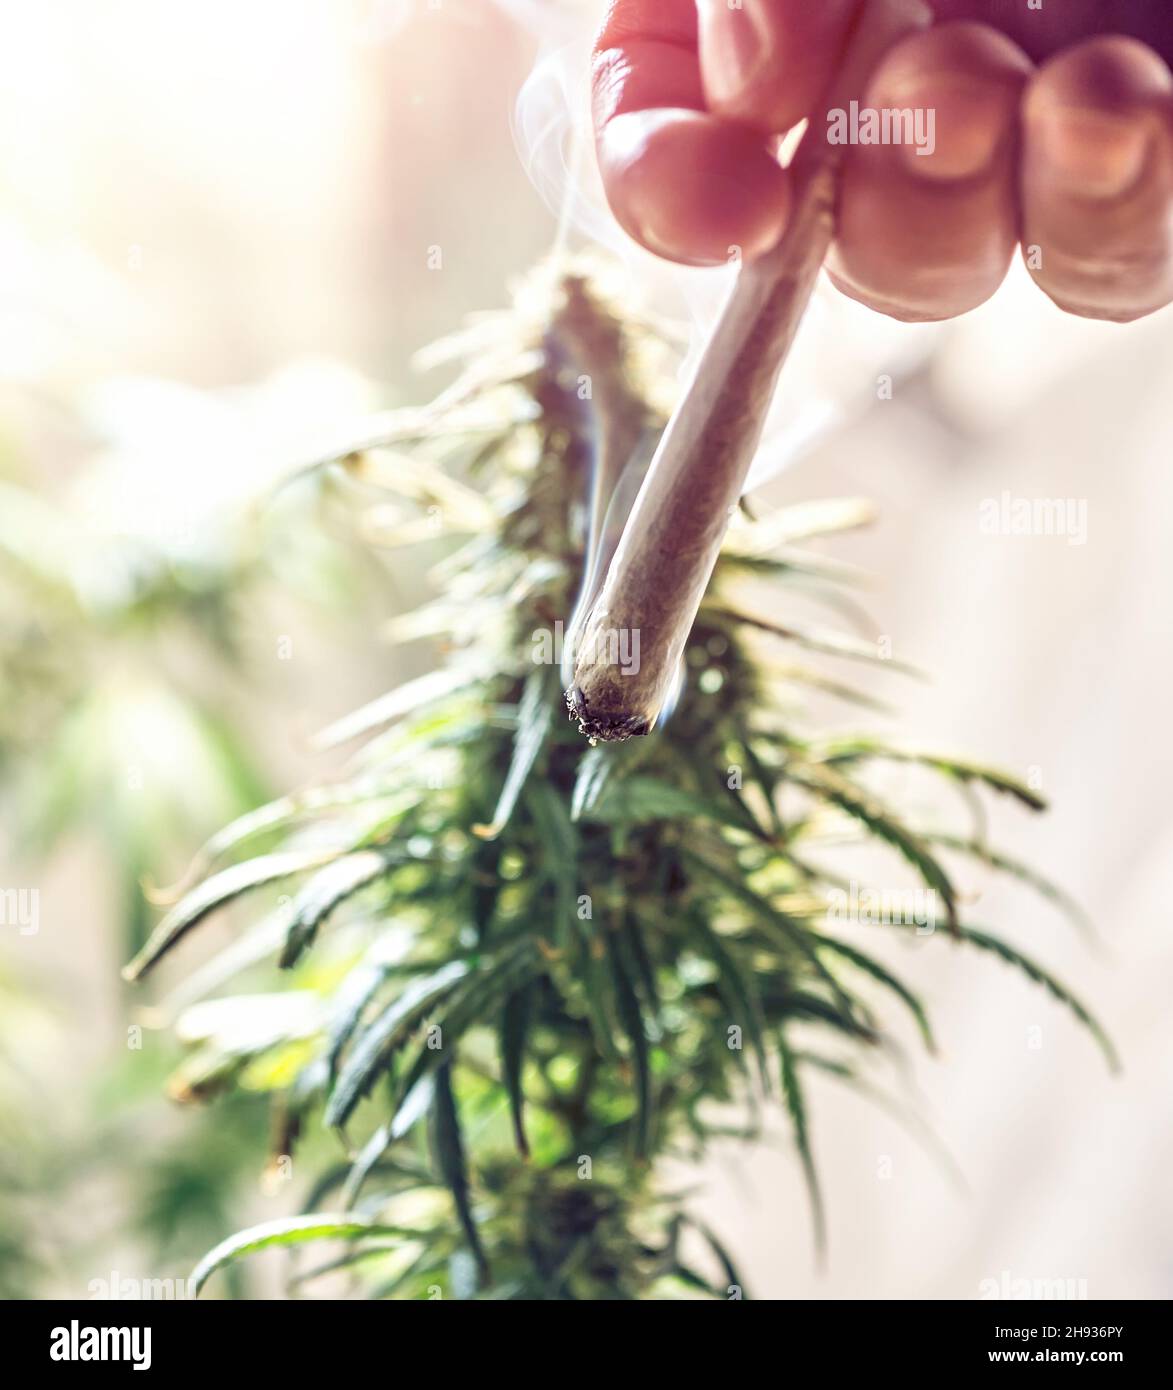 Hand holding marijuana joint against cannabis plant, drug use or medical marijuana Stock Photo